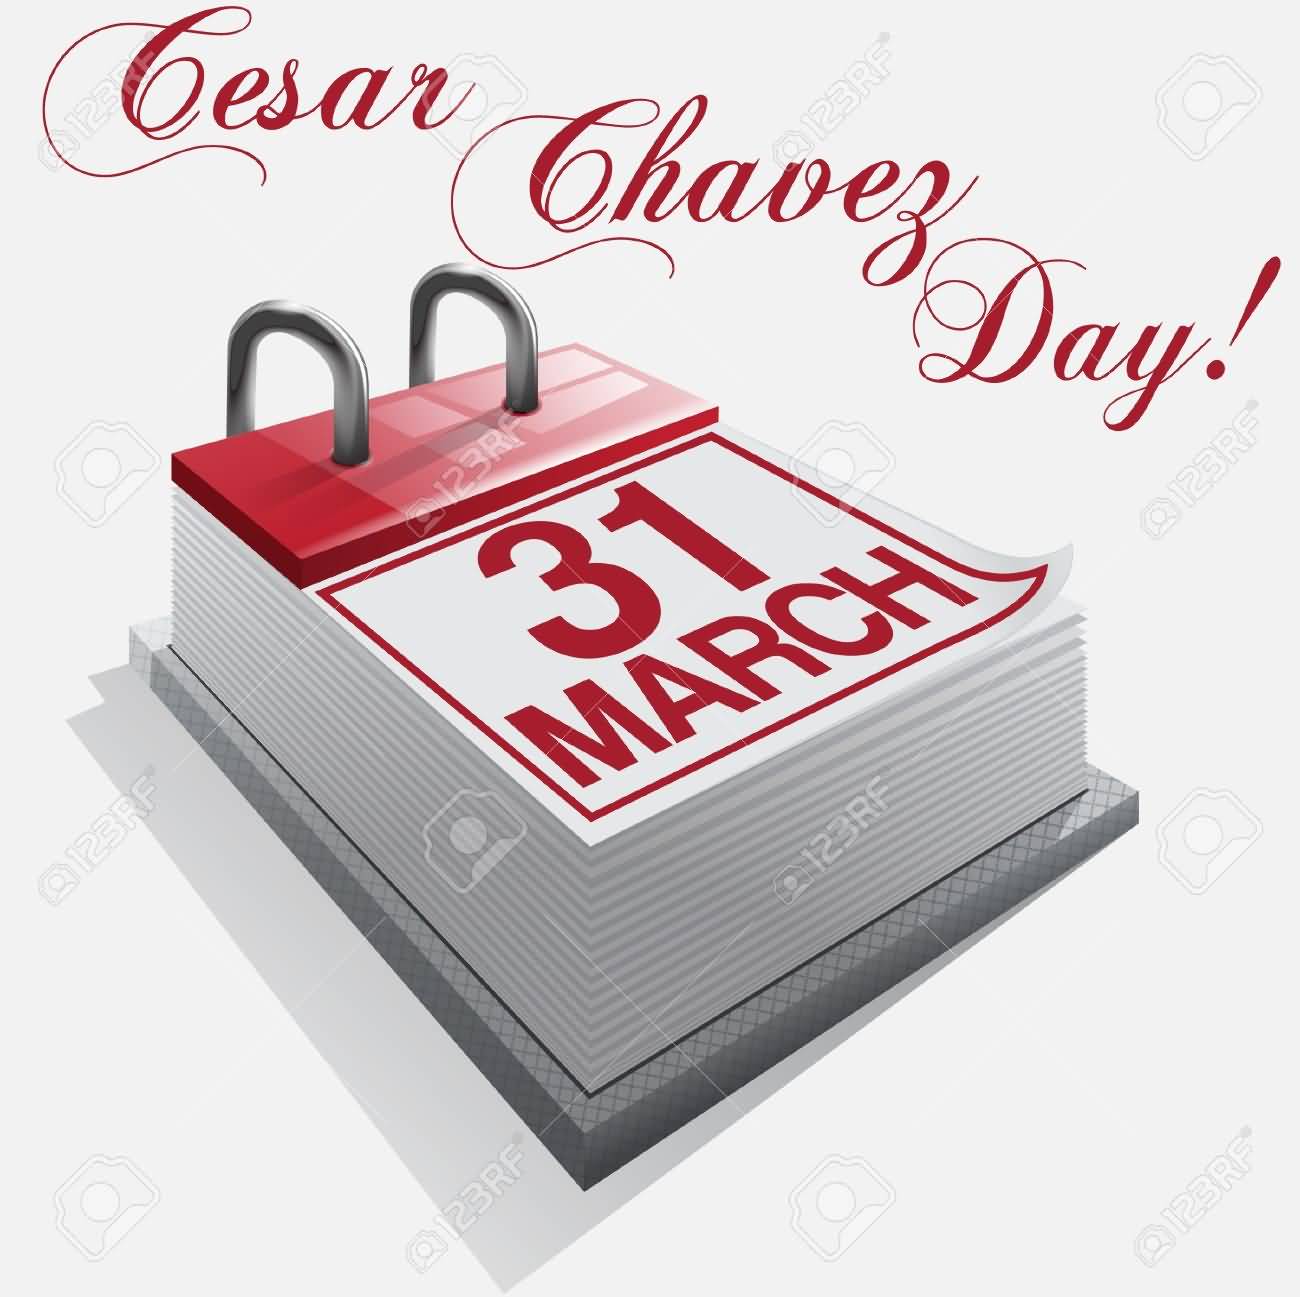 Cesar Chavez Day 31 March Calendar